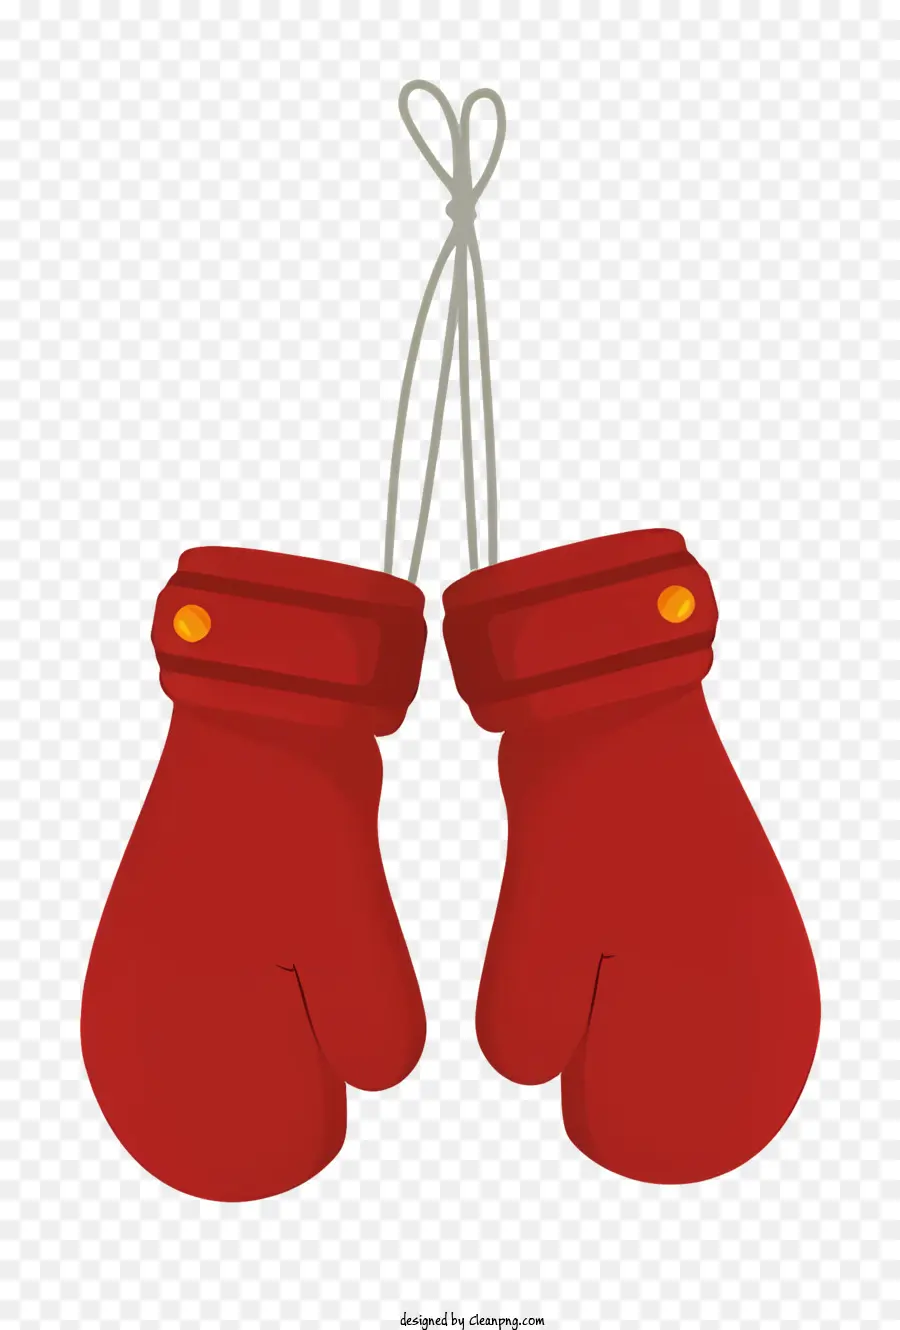 Guanti da boxe rossi guanti boxe boxe guanti su una corda guanti di boxe rossi e bianchi su un gancio - I guanti da boxe rossi pendono su una corda